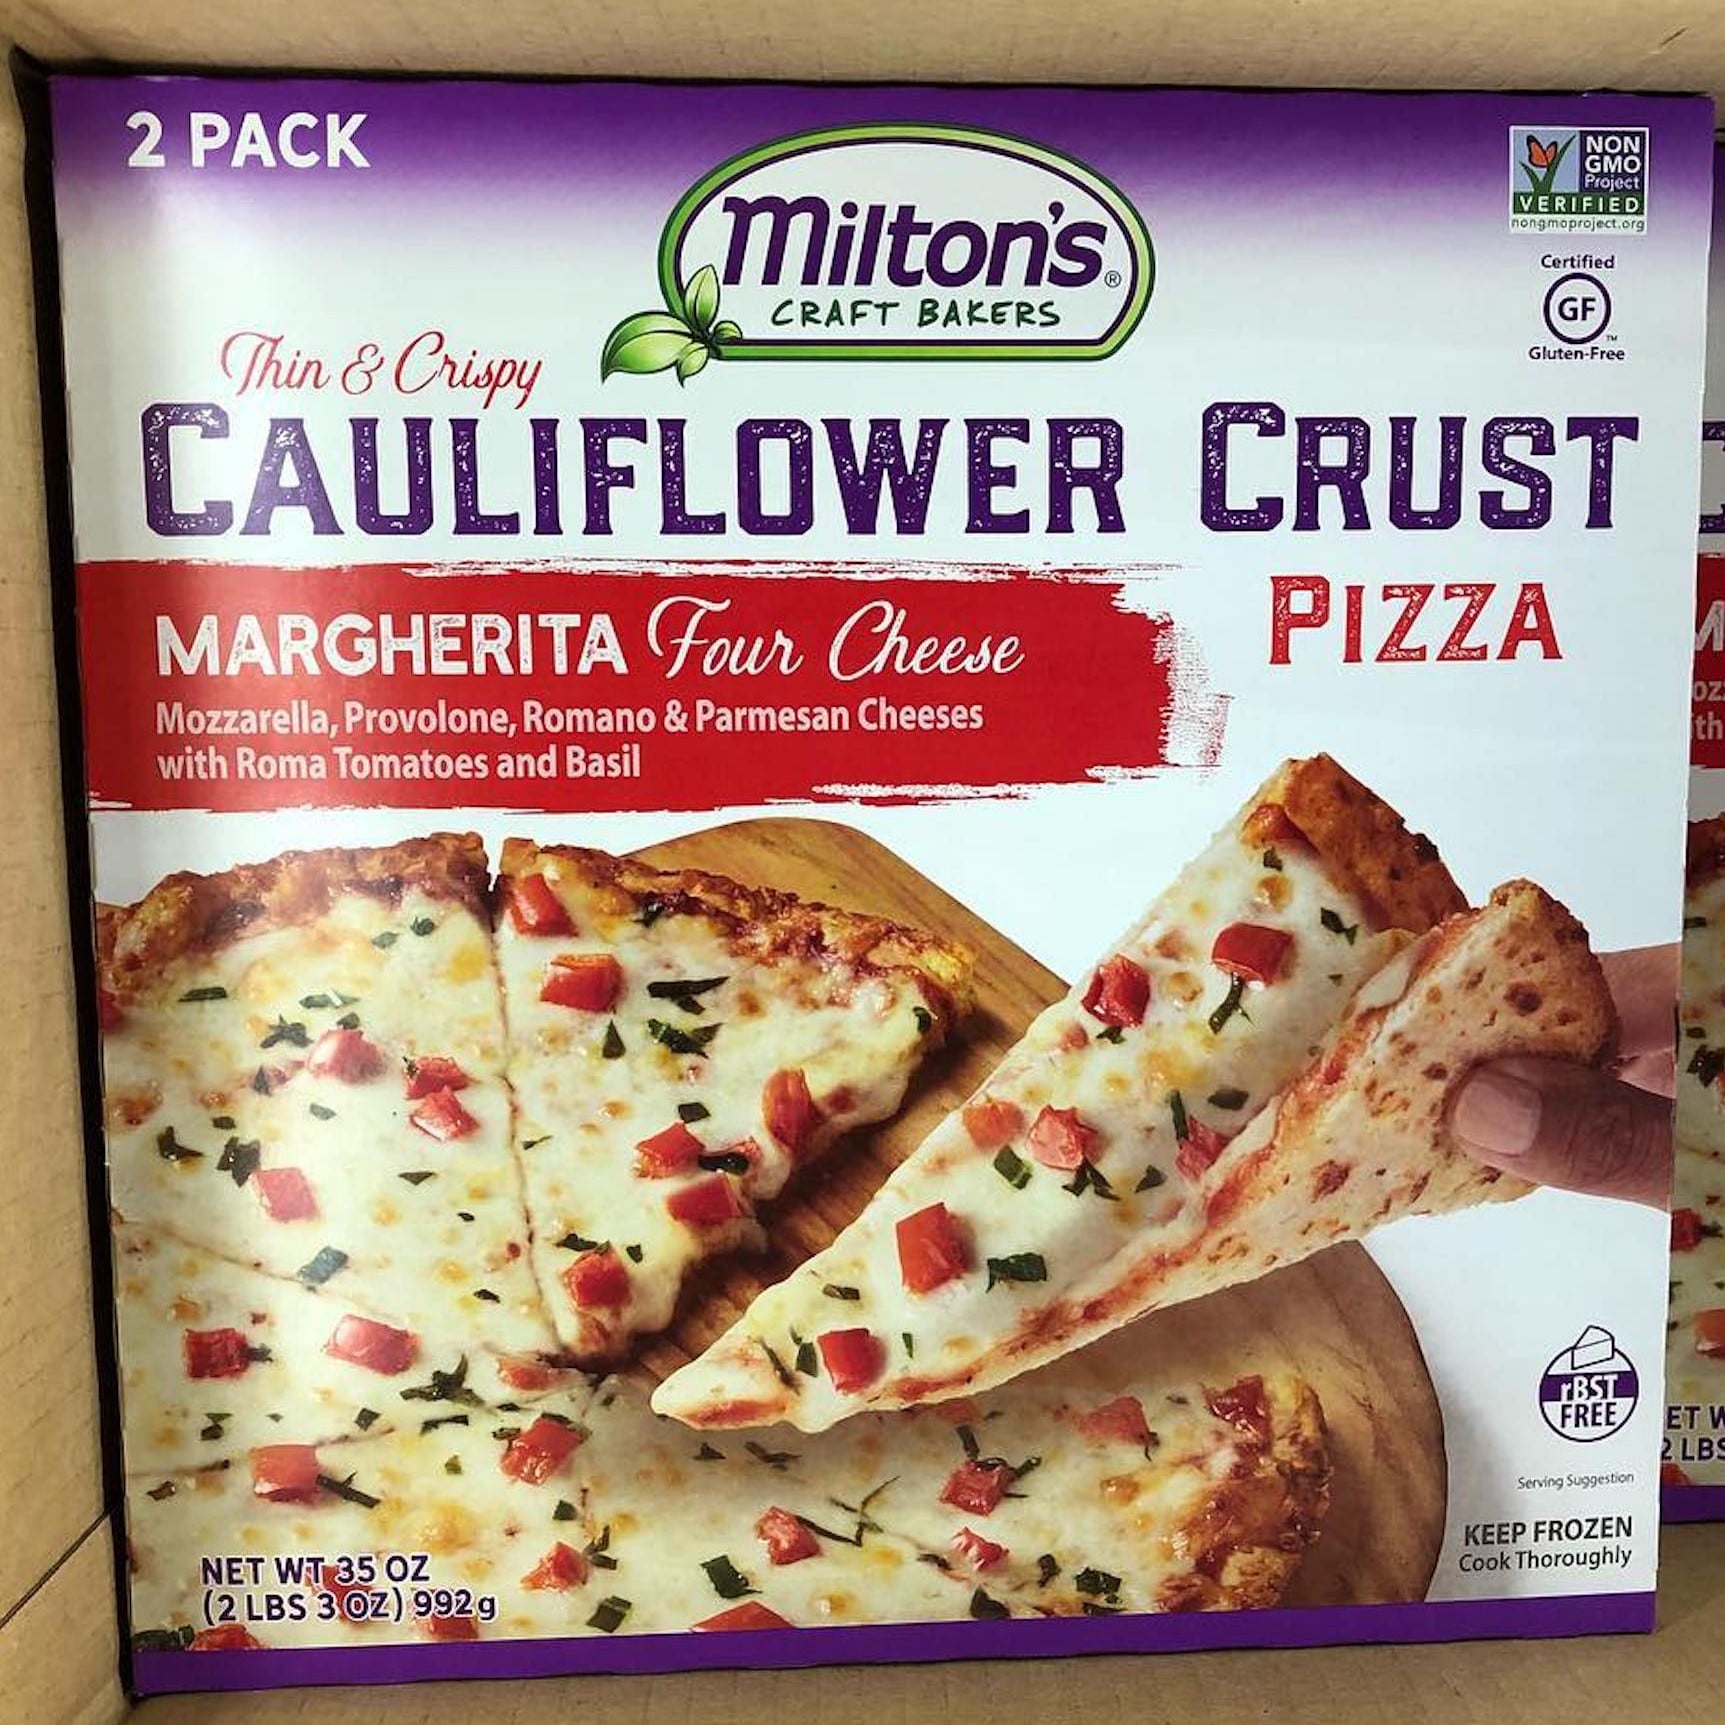 Can You Order Costco Pizza Online Cauliflower Crust Pizza At Costco Popsugar Fitness